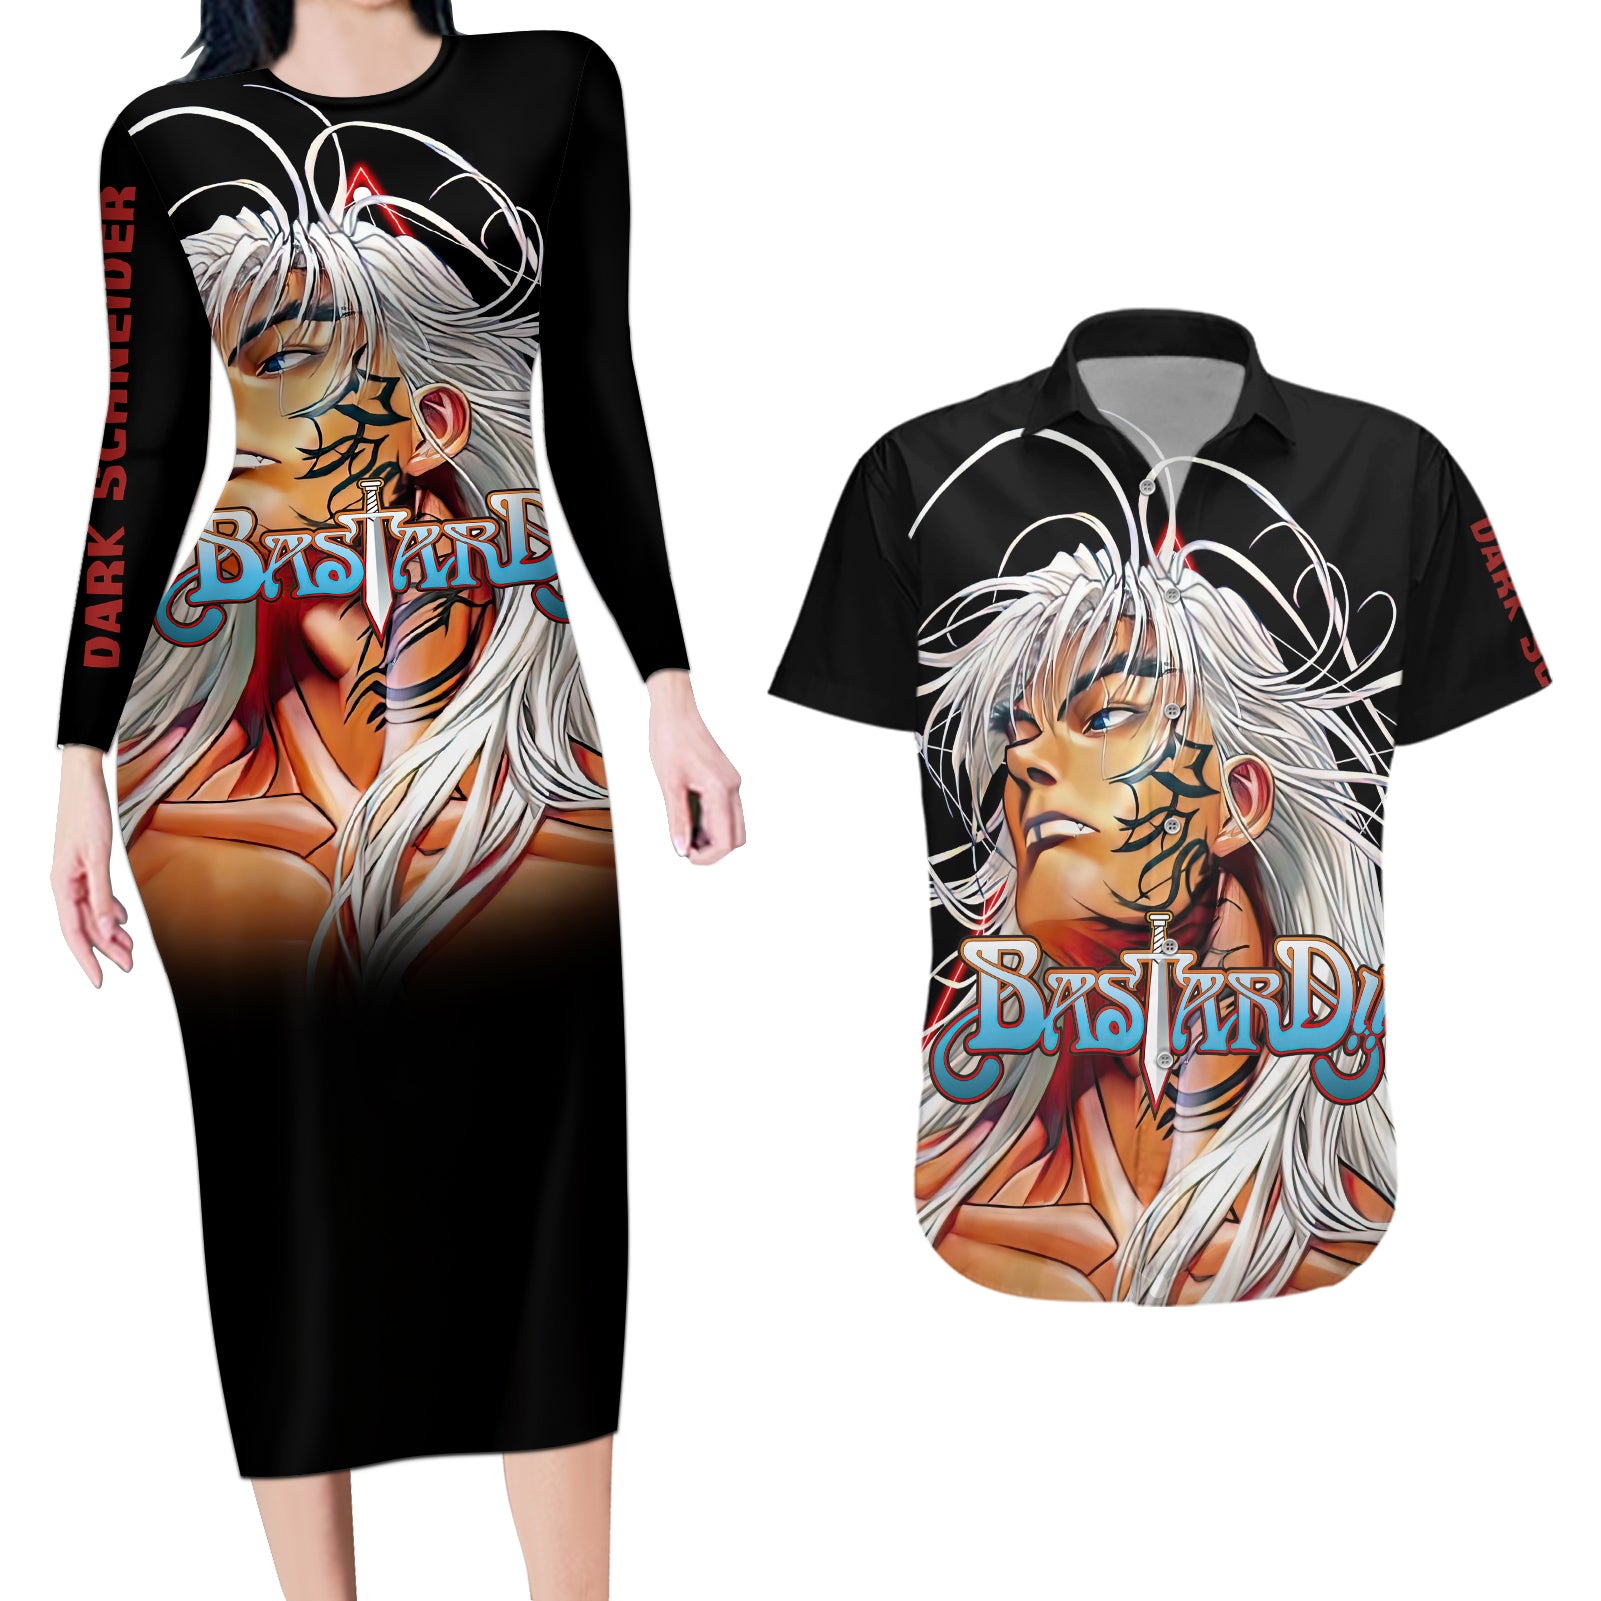 Dark Schneider Basrard Couples Matching Long Sleeve Bodycon Dress and Hawaiian Shirt Anime Style